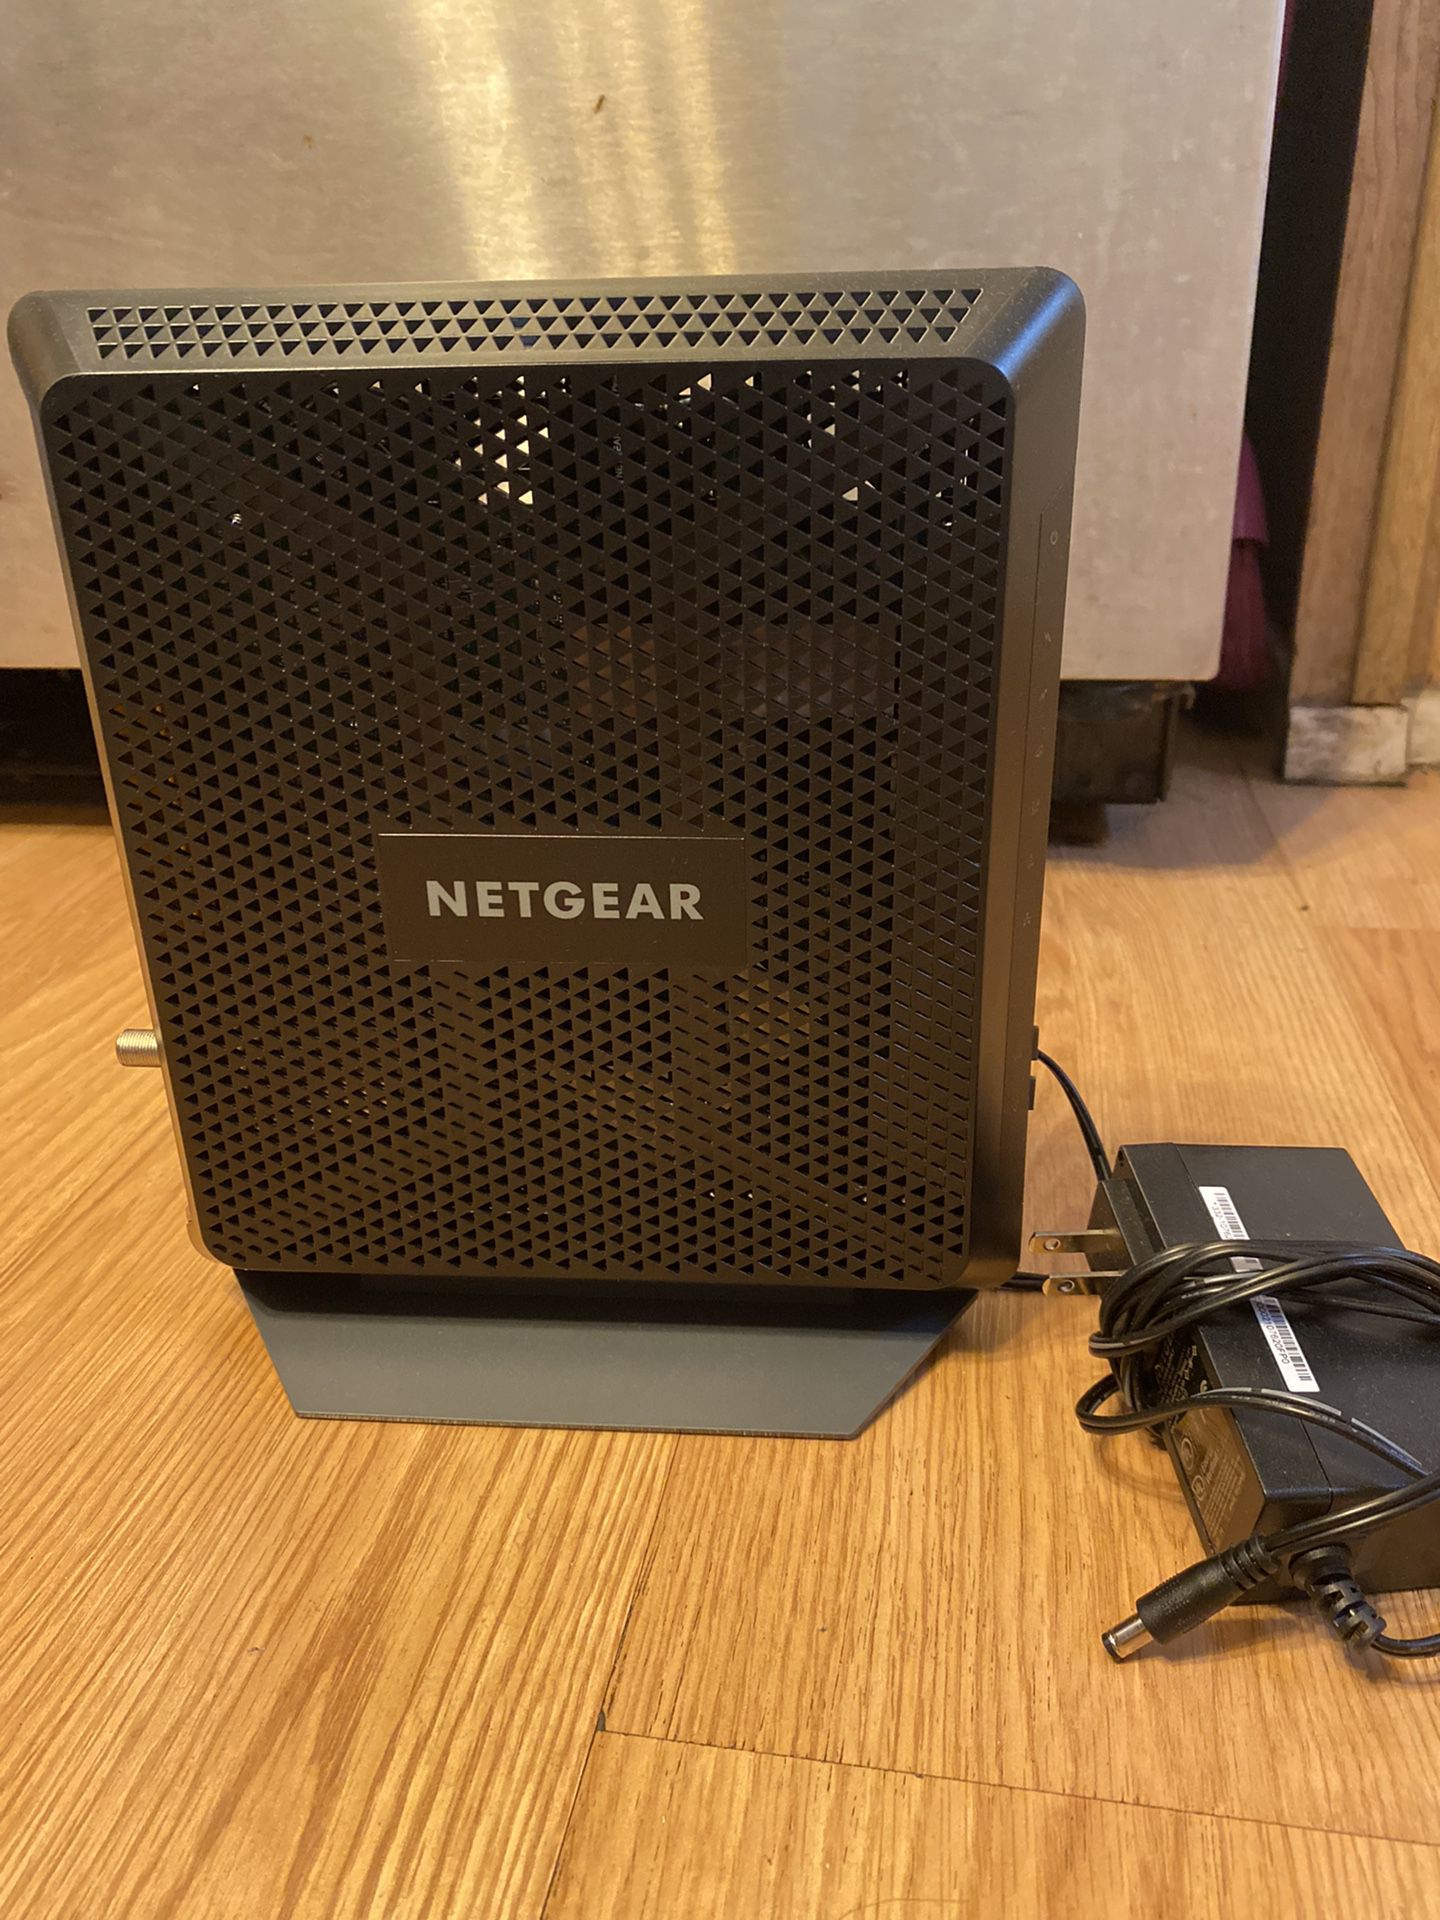 Netgear Nighthawk AC1900 Dual-band Modem Router